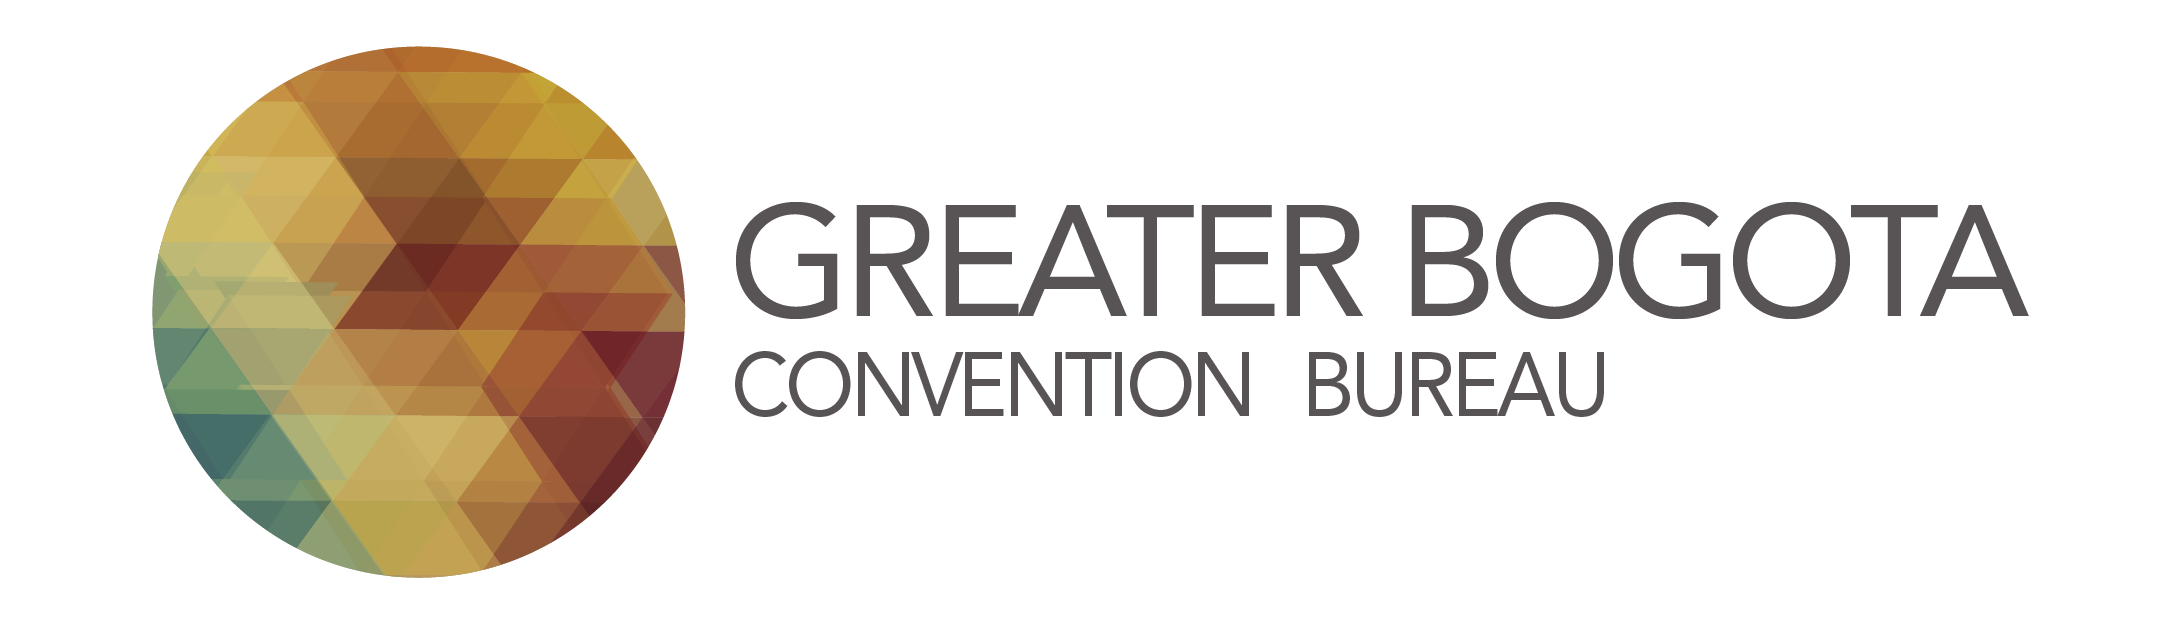 Greater Bogota Convention Bureau